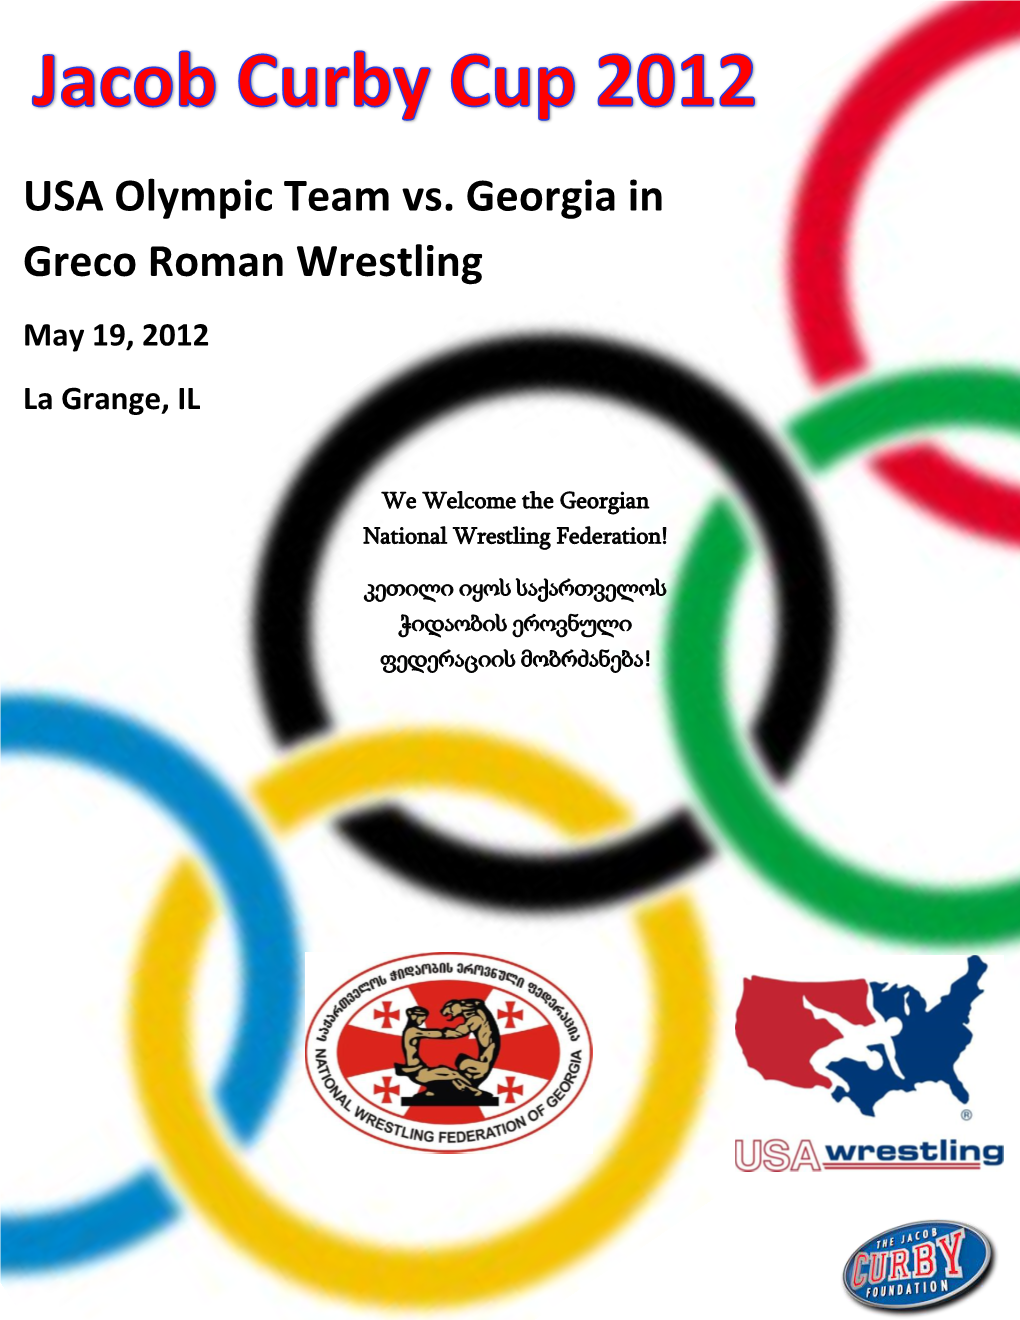 USA Olympic Team Vs. Georgia in Greco Roman Wrestling